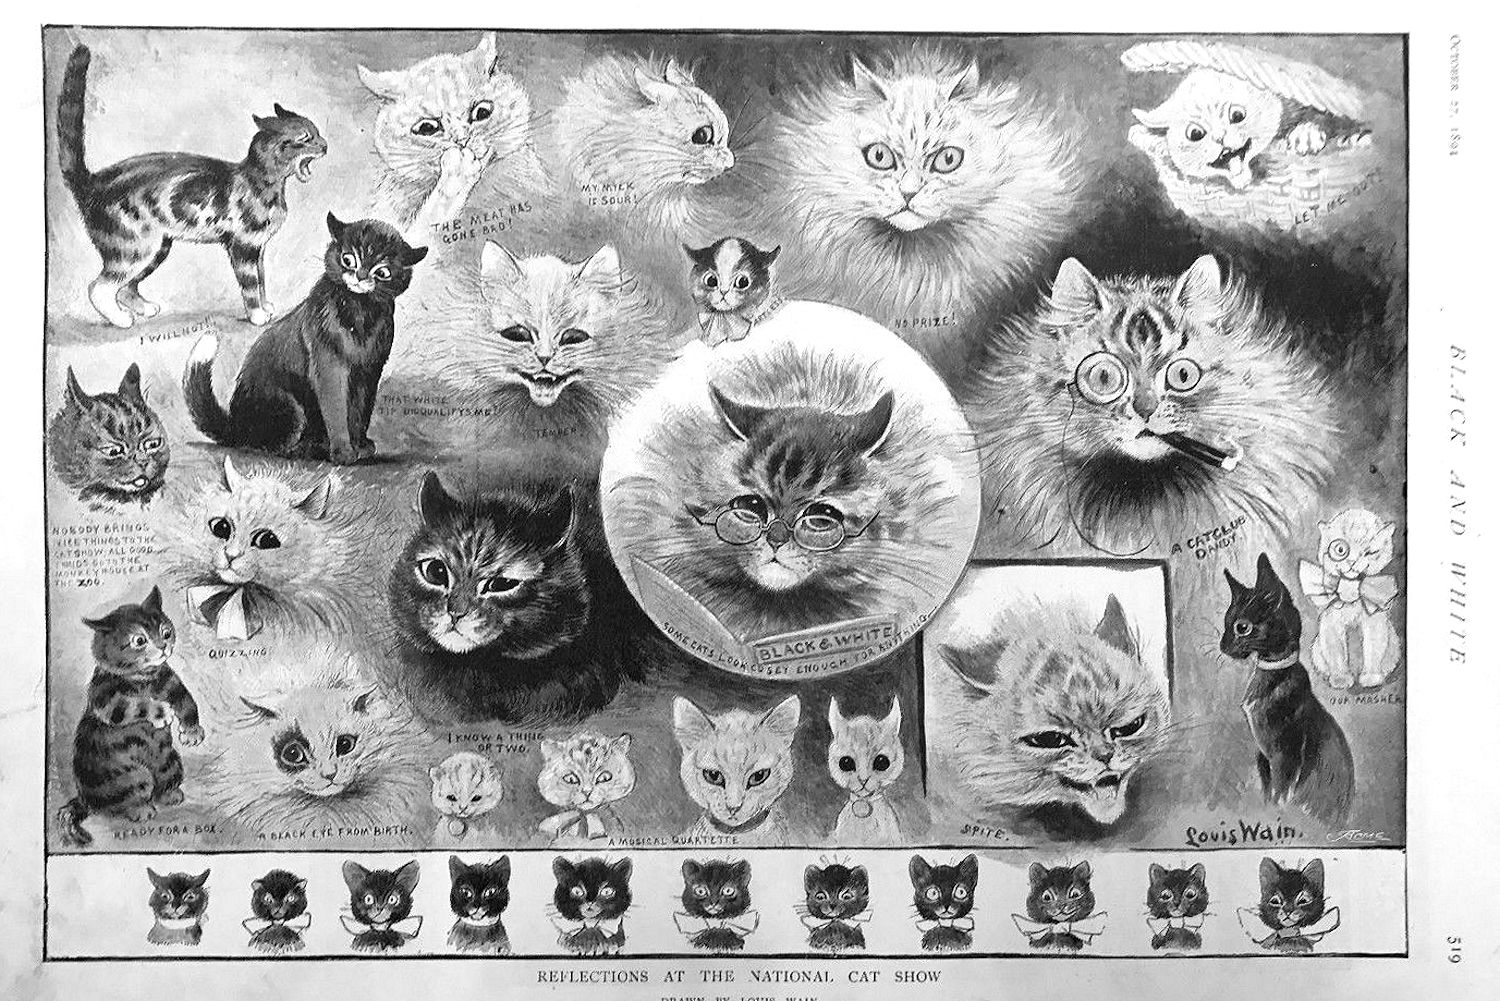 1894 crystal palace cat show